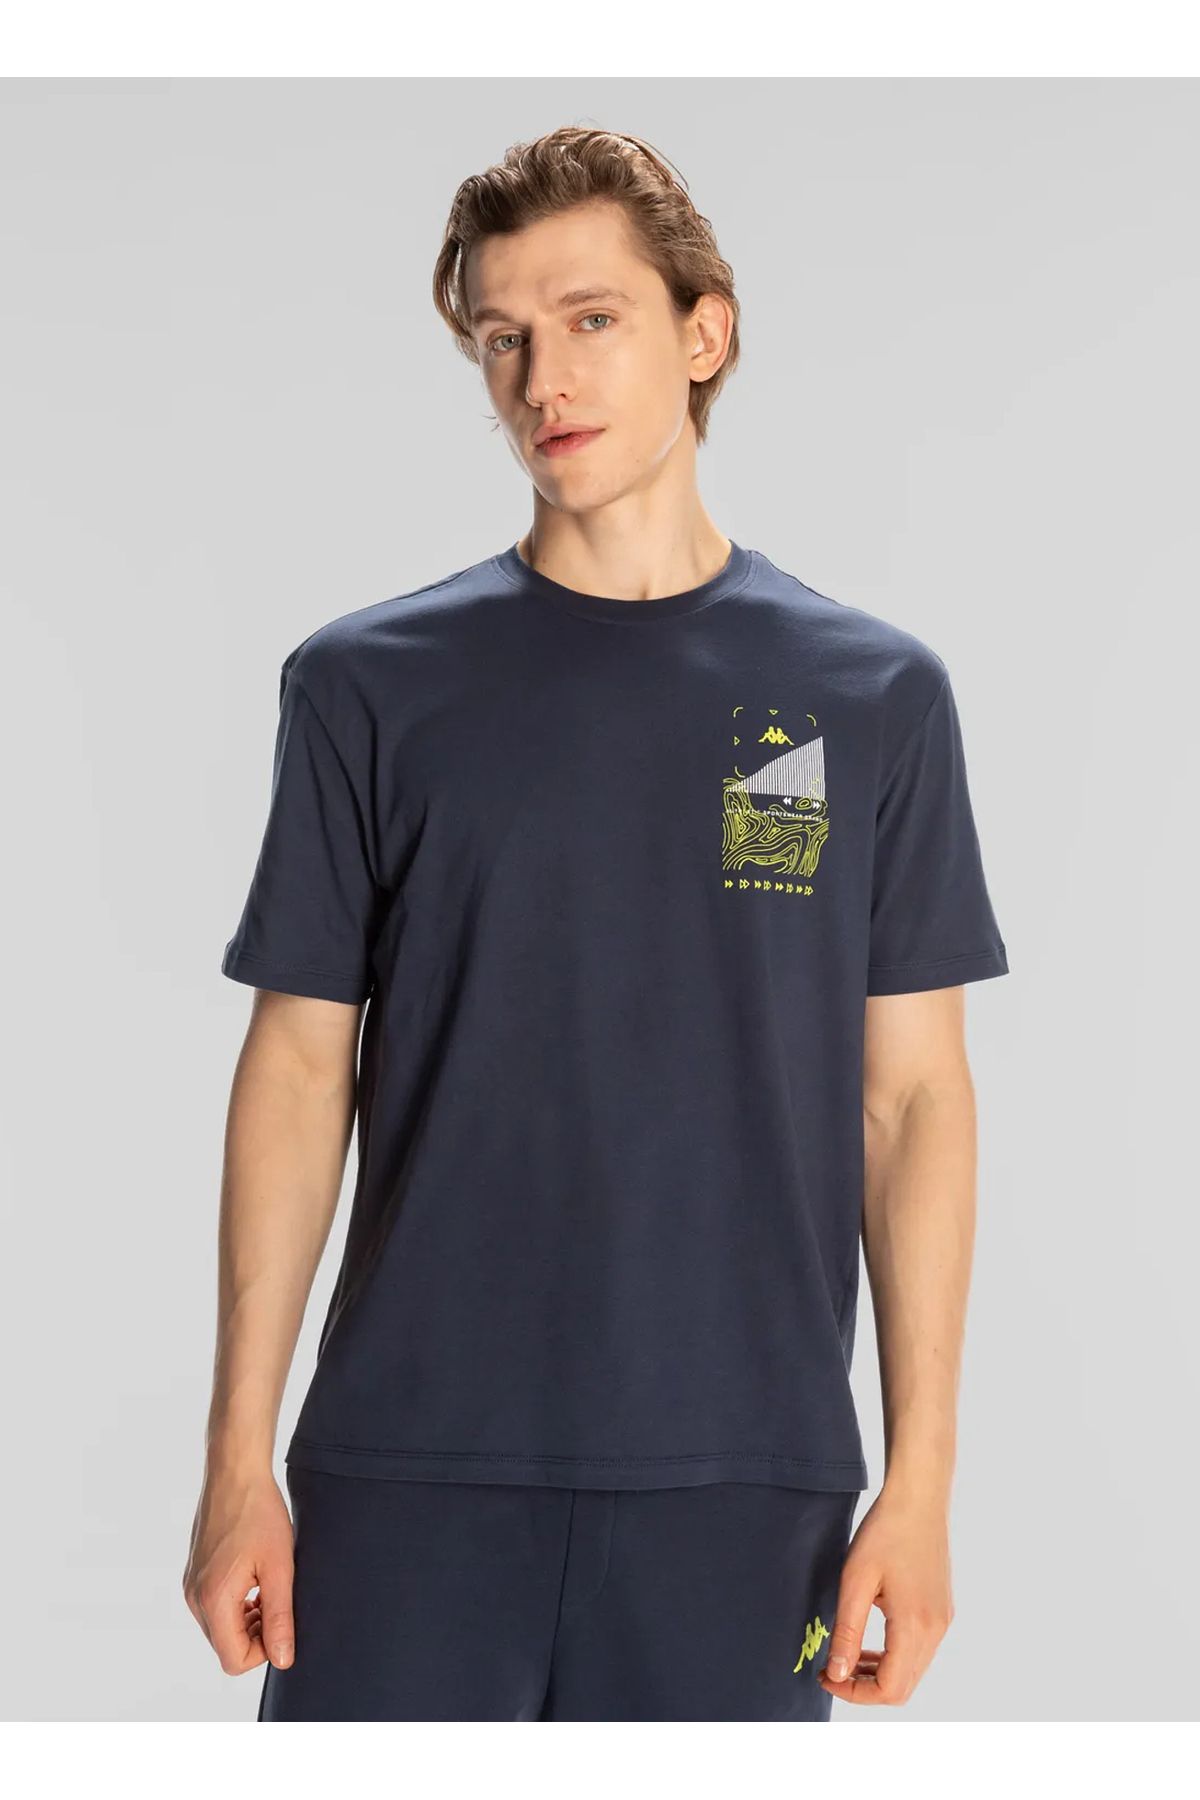 Kappa T-Shirt, XL, Mavi